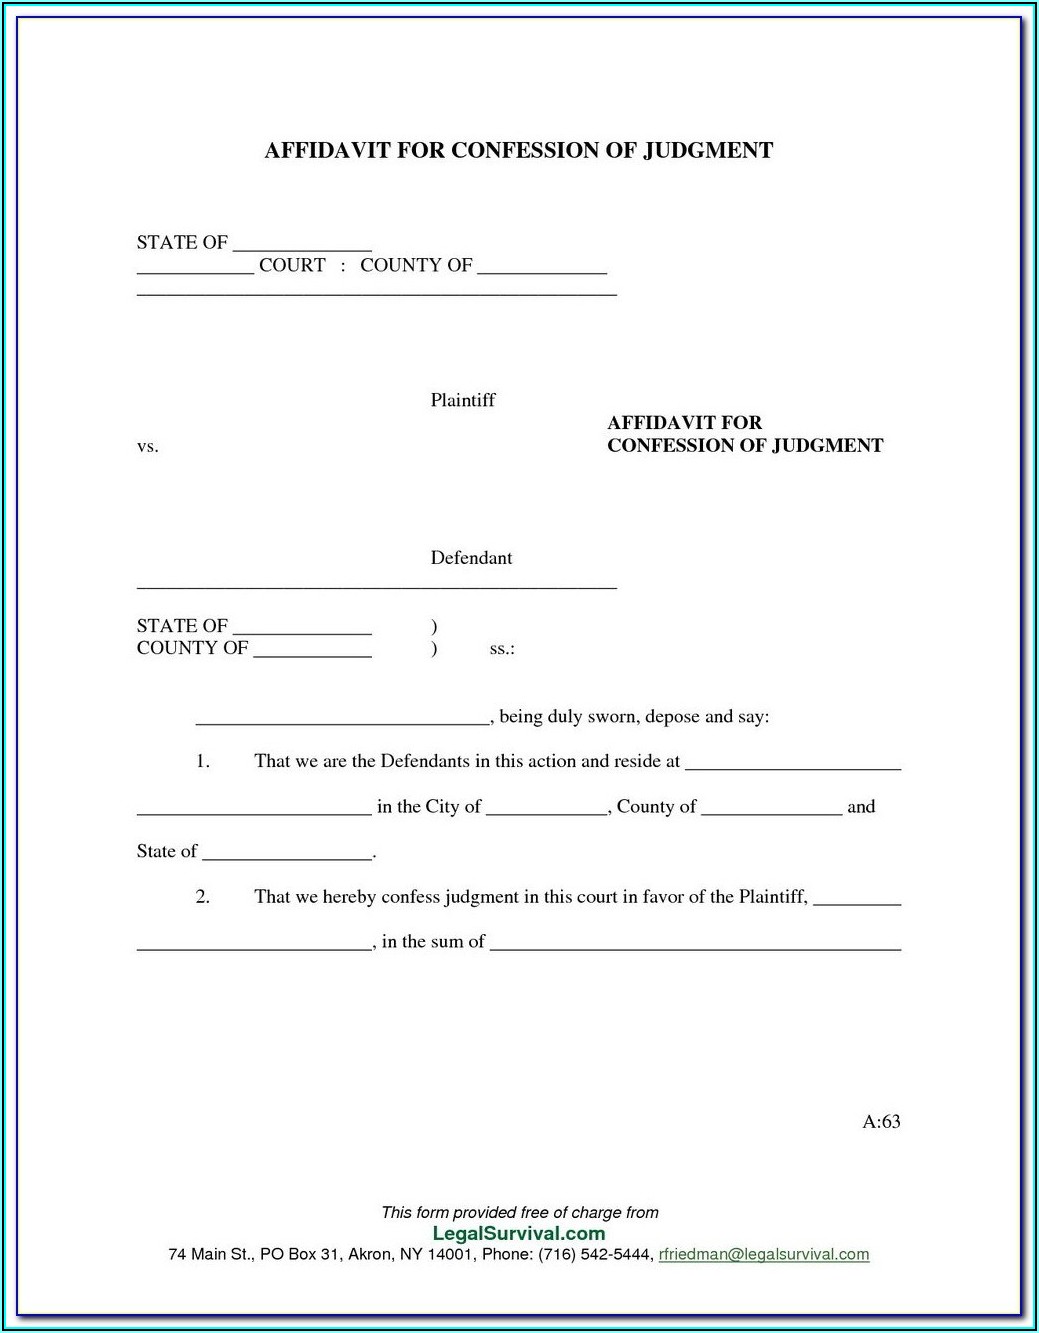 blank-affidavit-form-zimbabwe-pdf-form-resume-examples-gq960k1vor